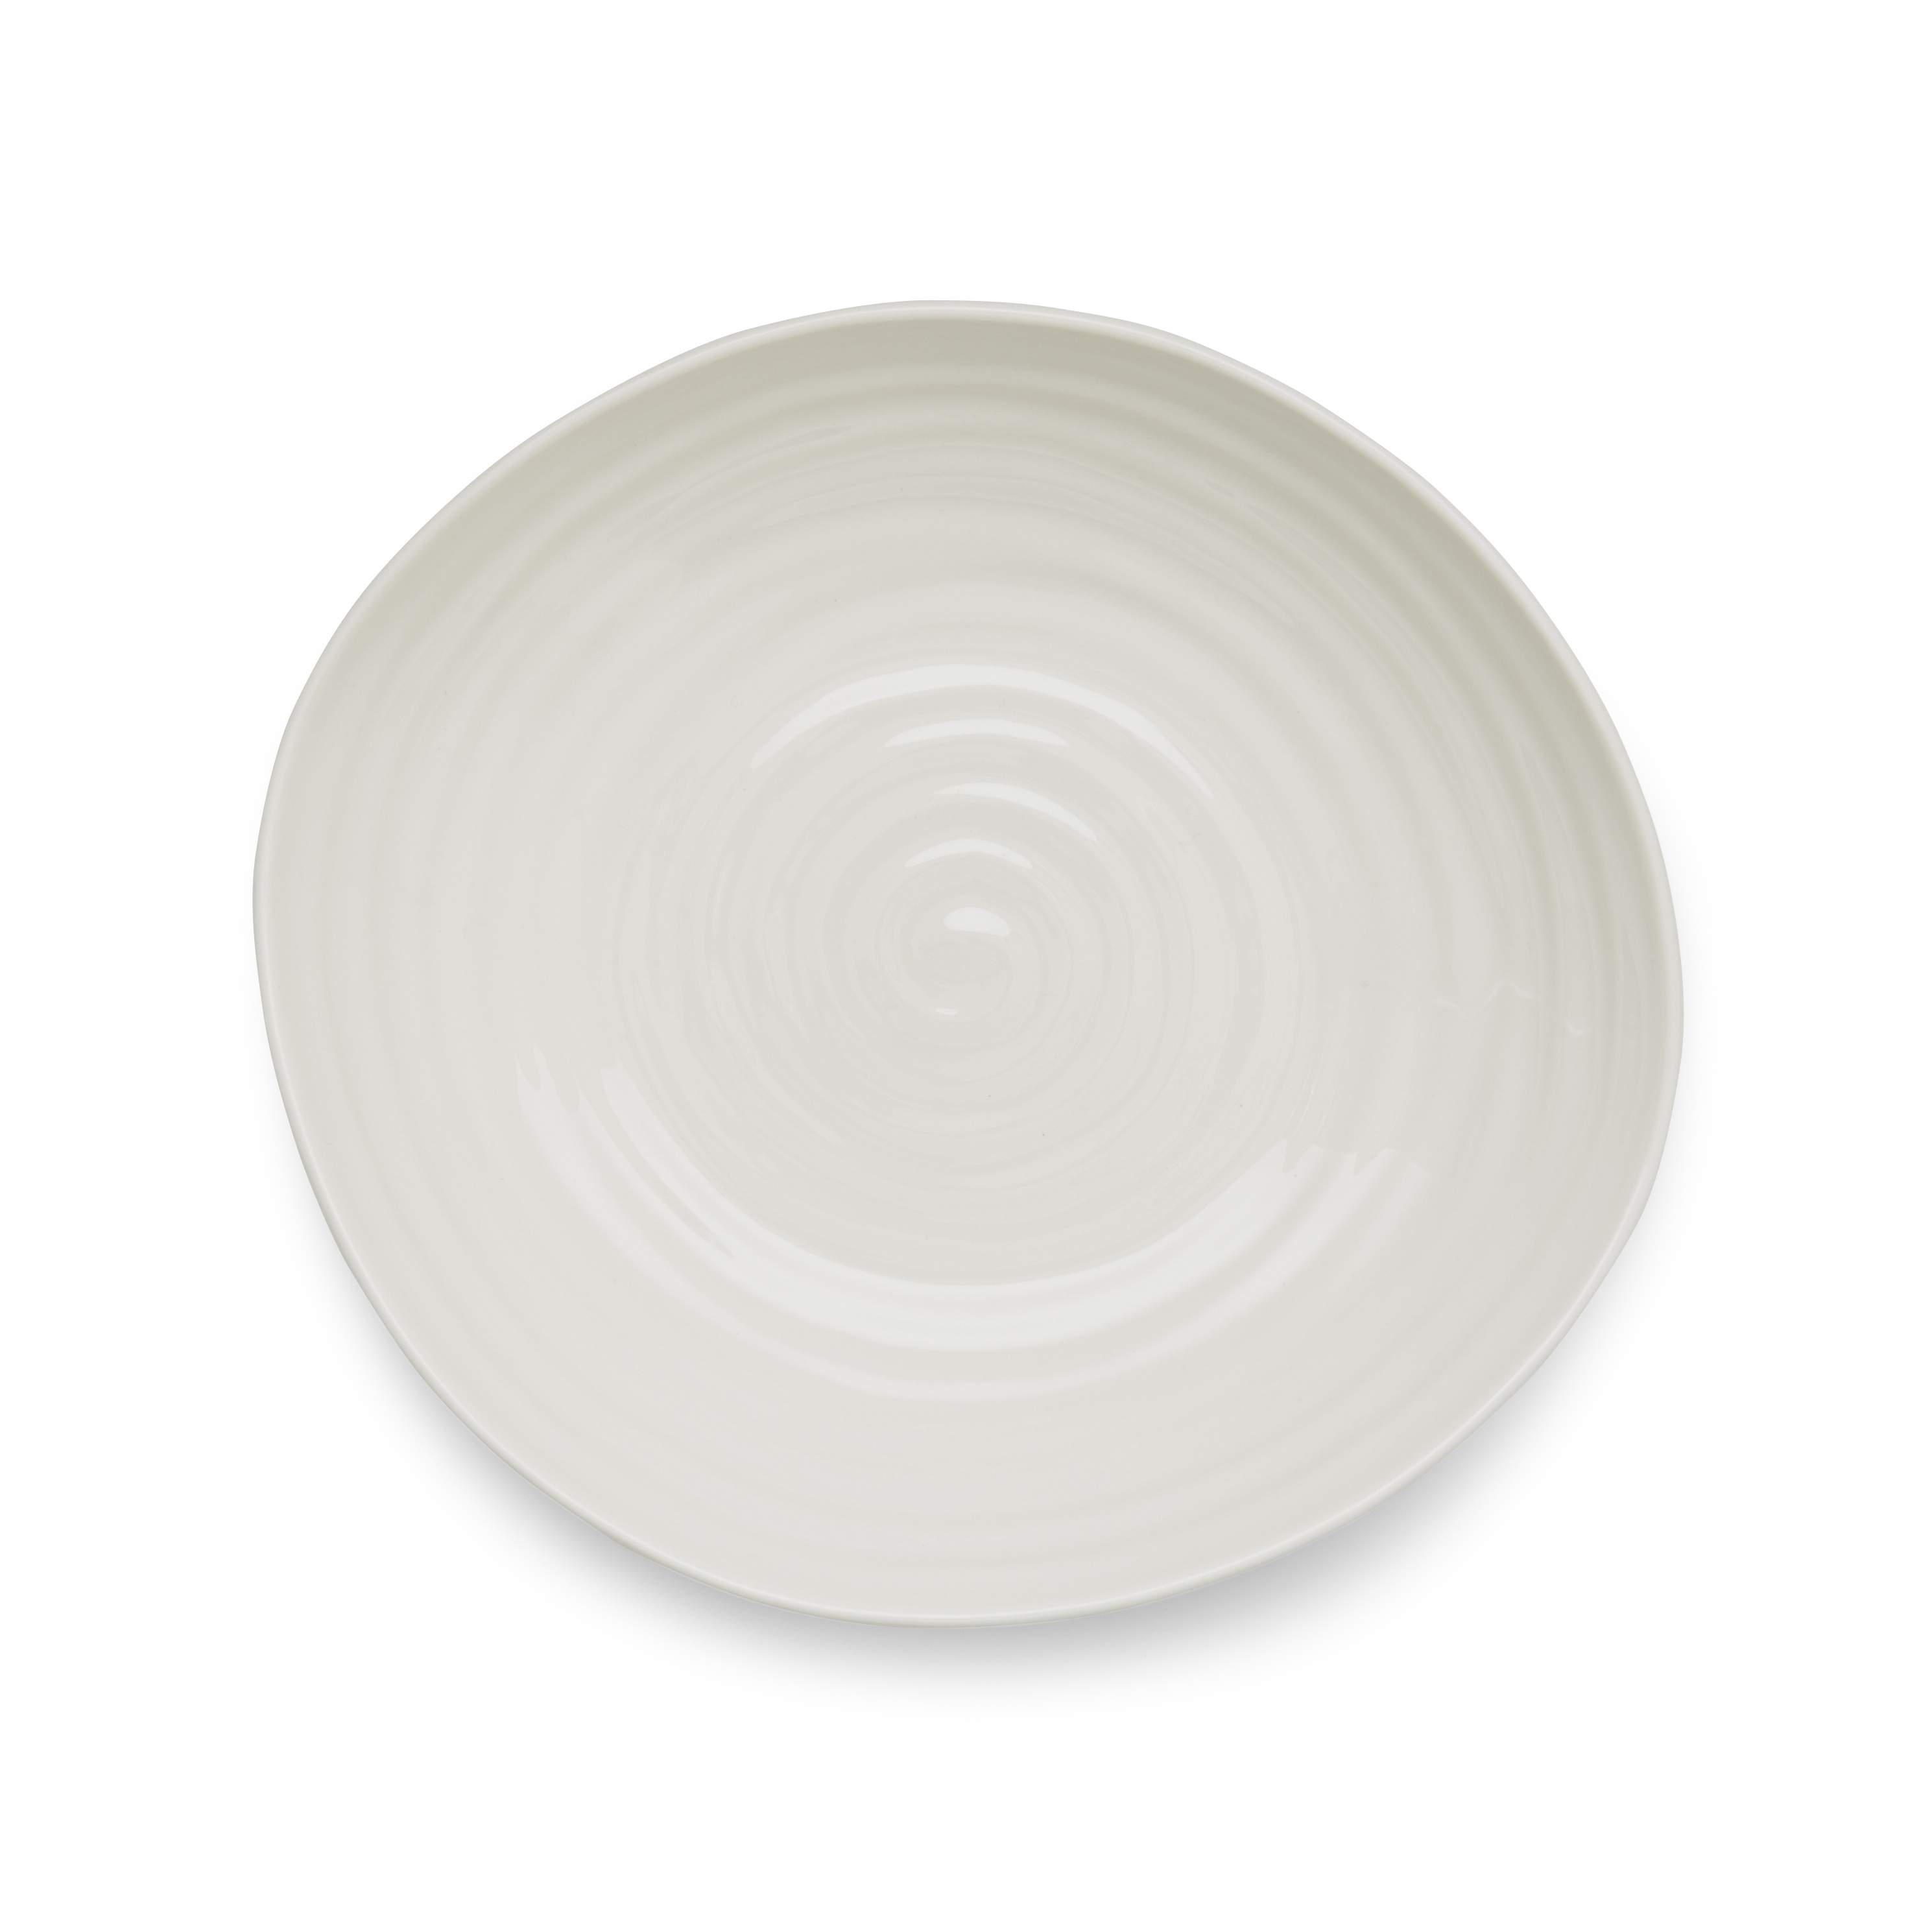 Sophie Conran Set of 4 Pasta Bowls, White image number null